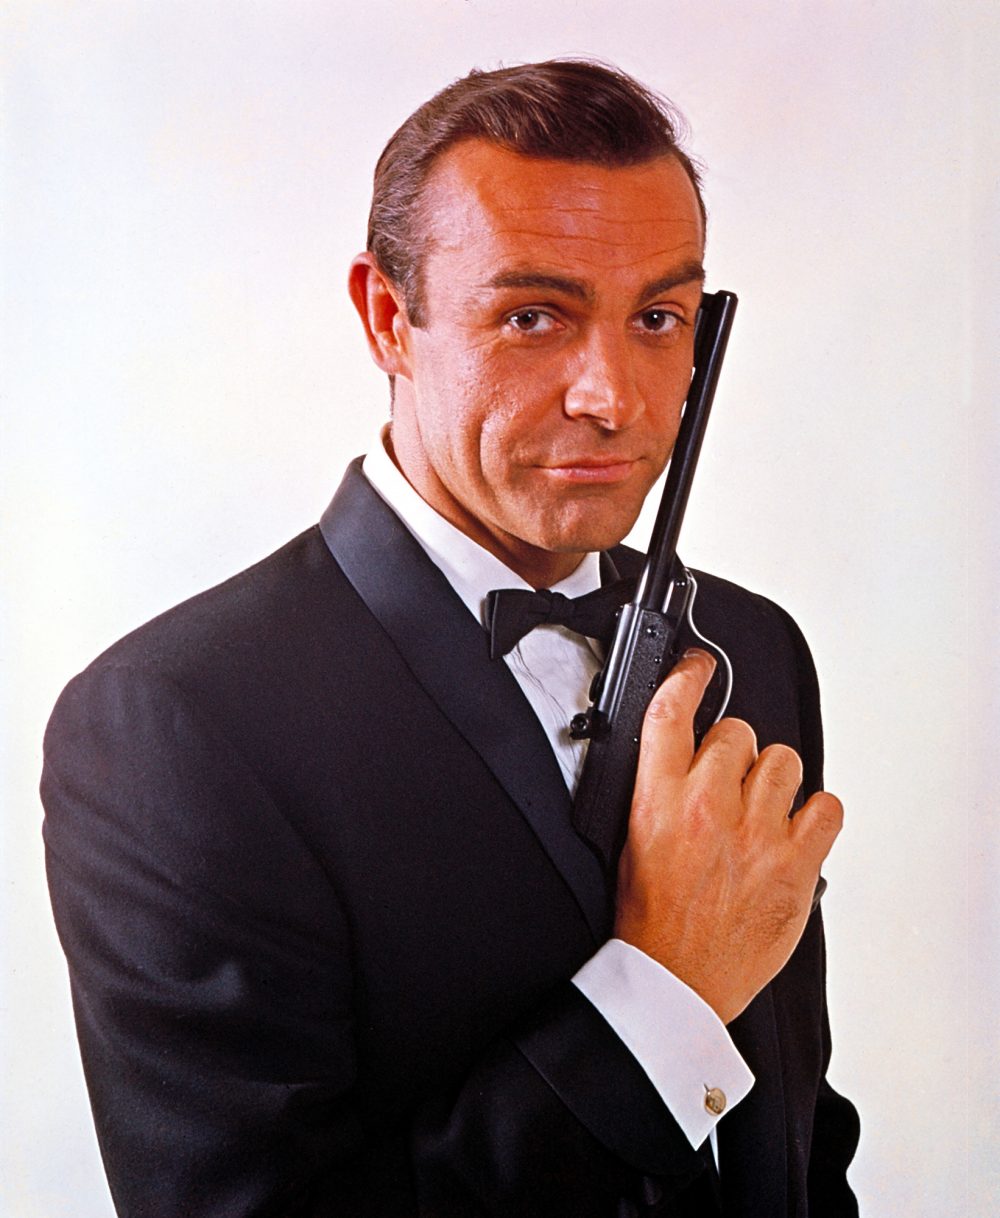 This James Bond actor designed a special California license plate